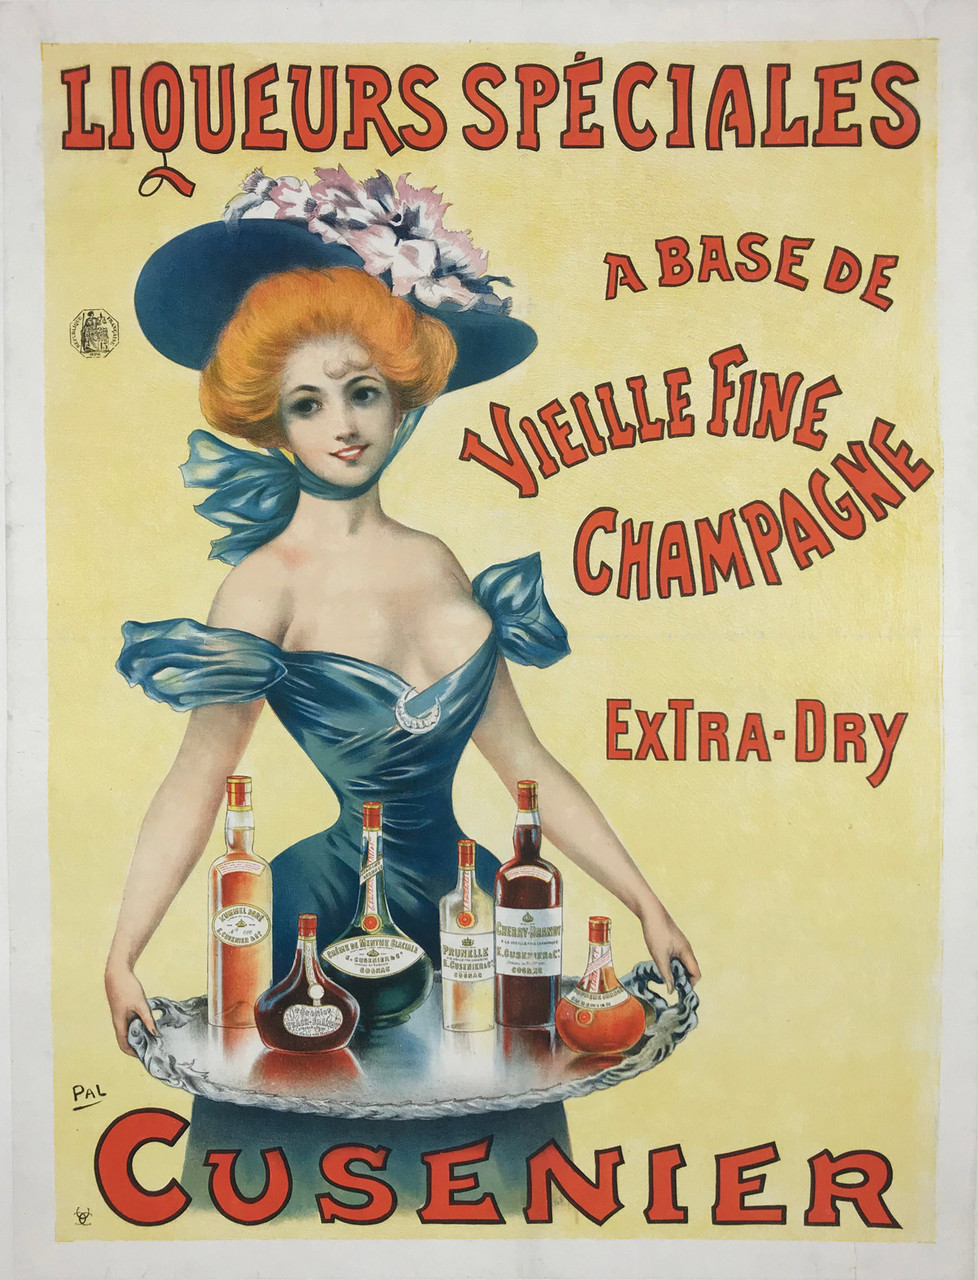 1898 Cusenier Liqueurs Speciales Poster by Pal